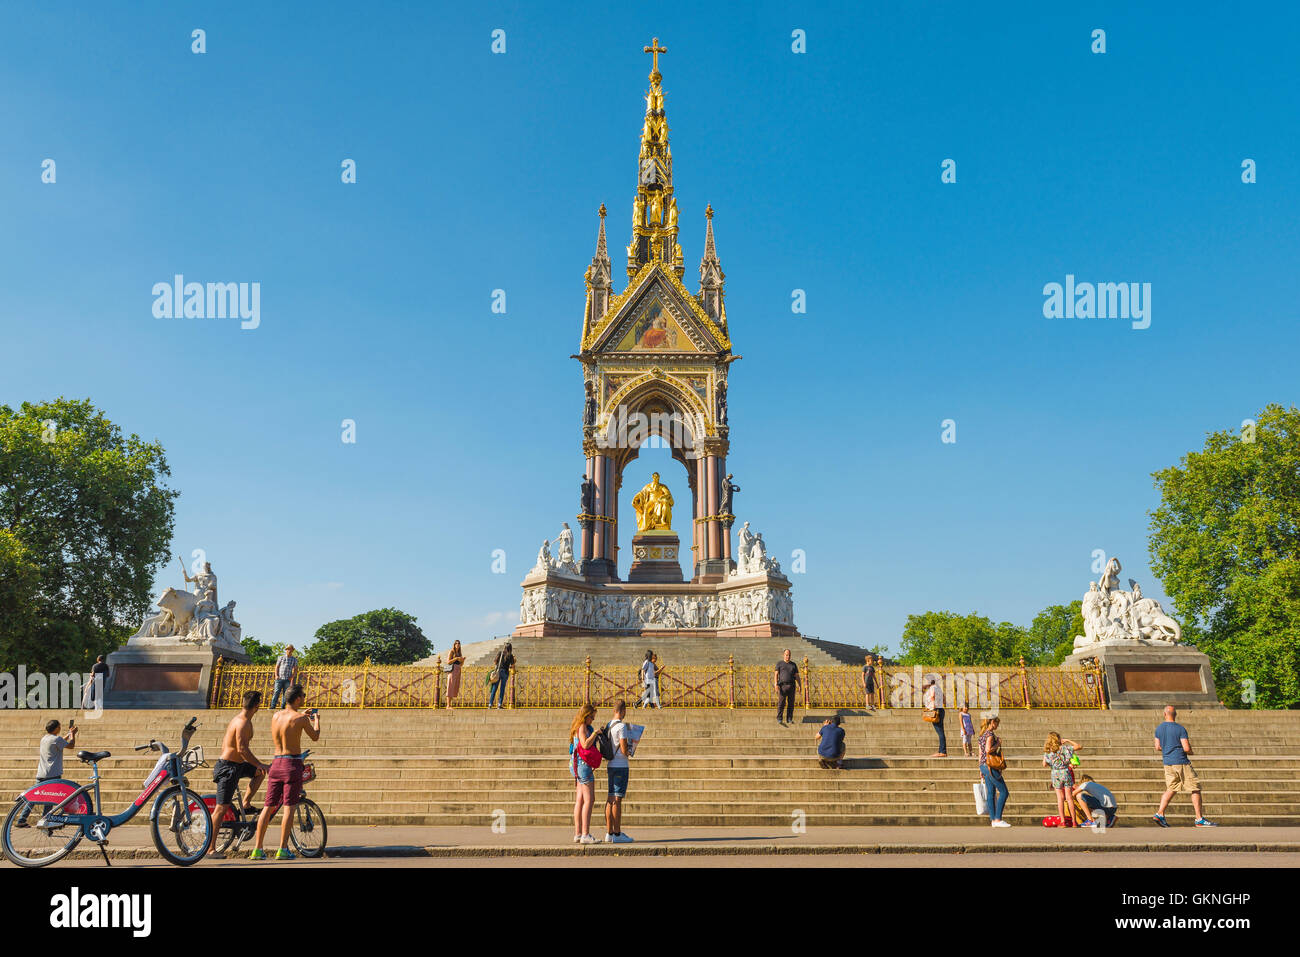 London summer, tourists in summer visit the Albert Memorial in Kensington Gardens, London, UK Stock Photo